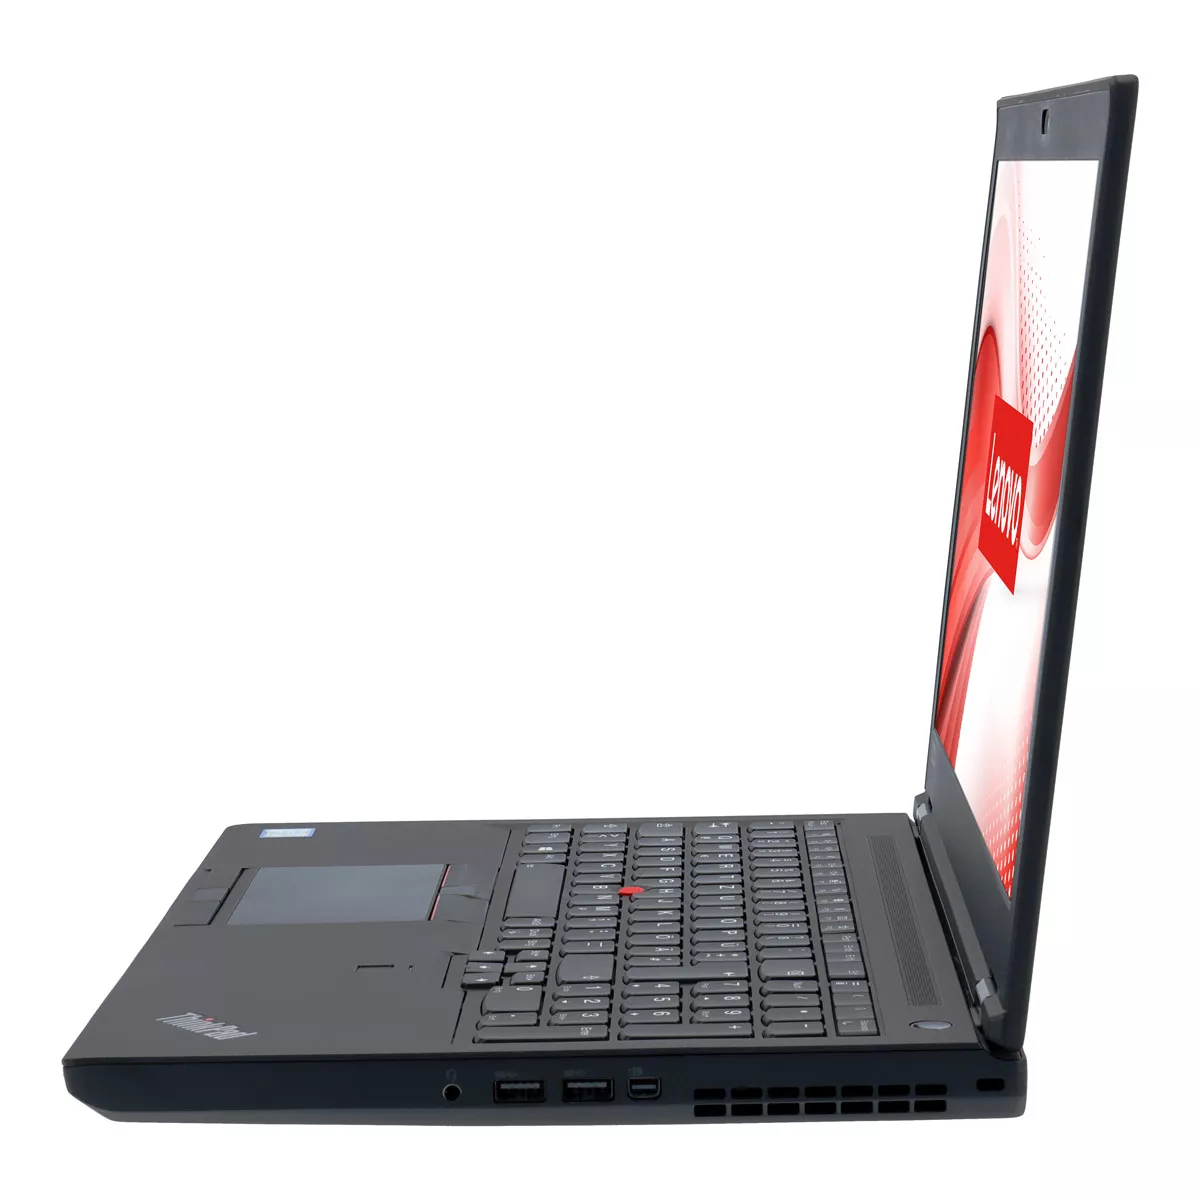 Lenovo ThinkPad P52 Core i7 8750H Full-HD nVidia Quadro P1000M 500 GB M.2 SSD Webcam A